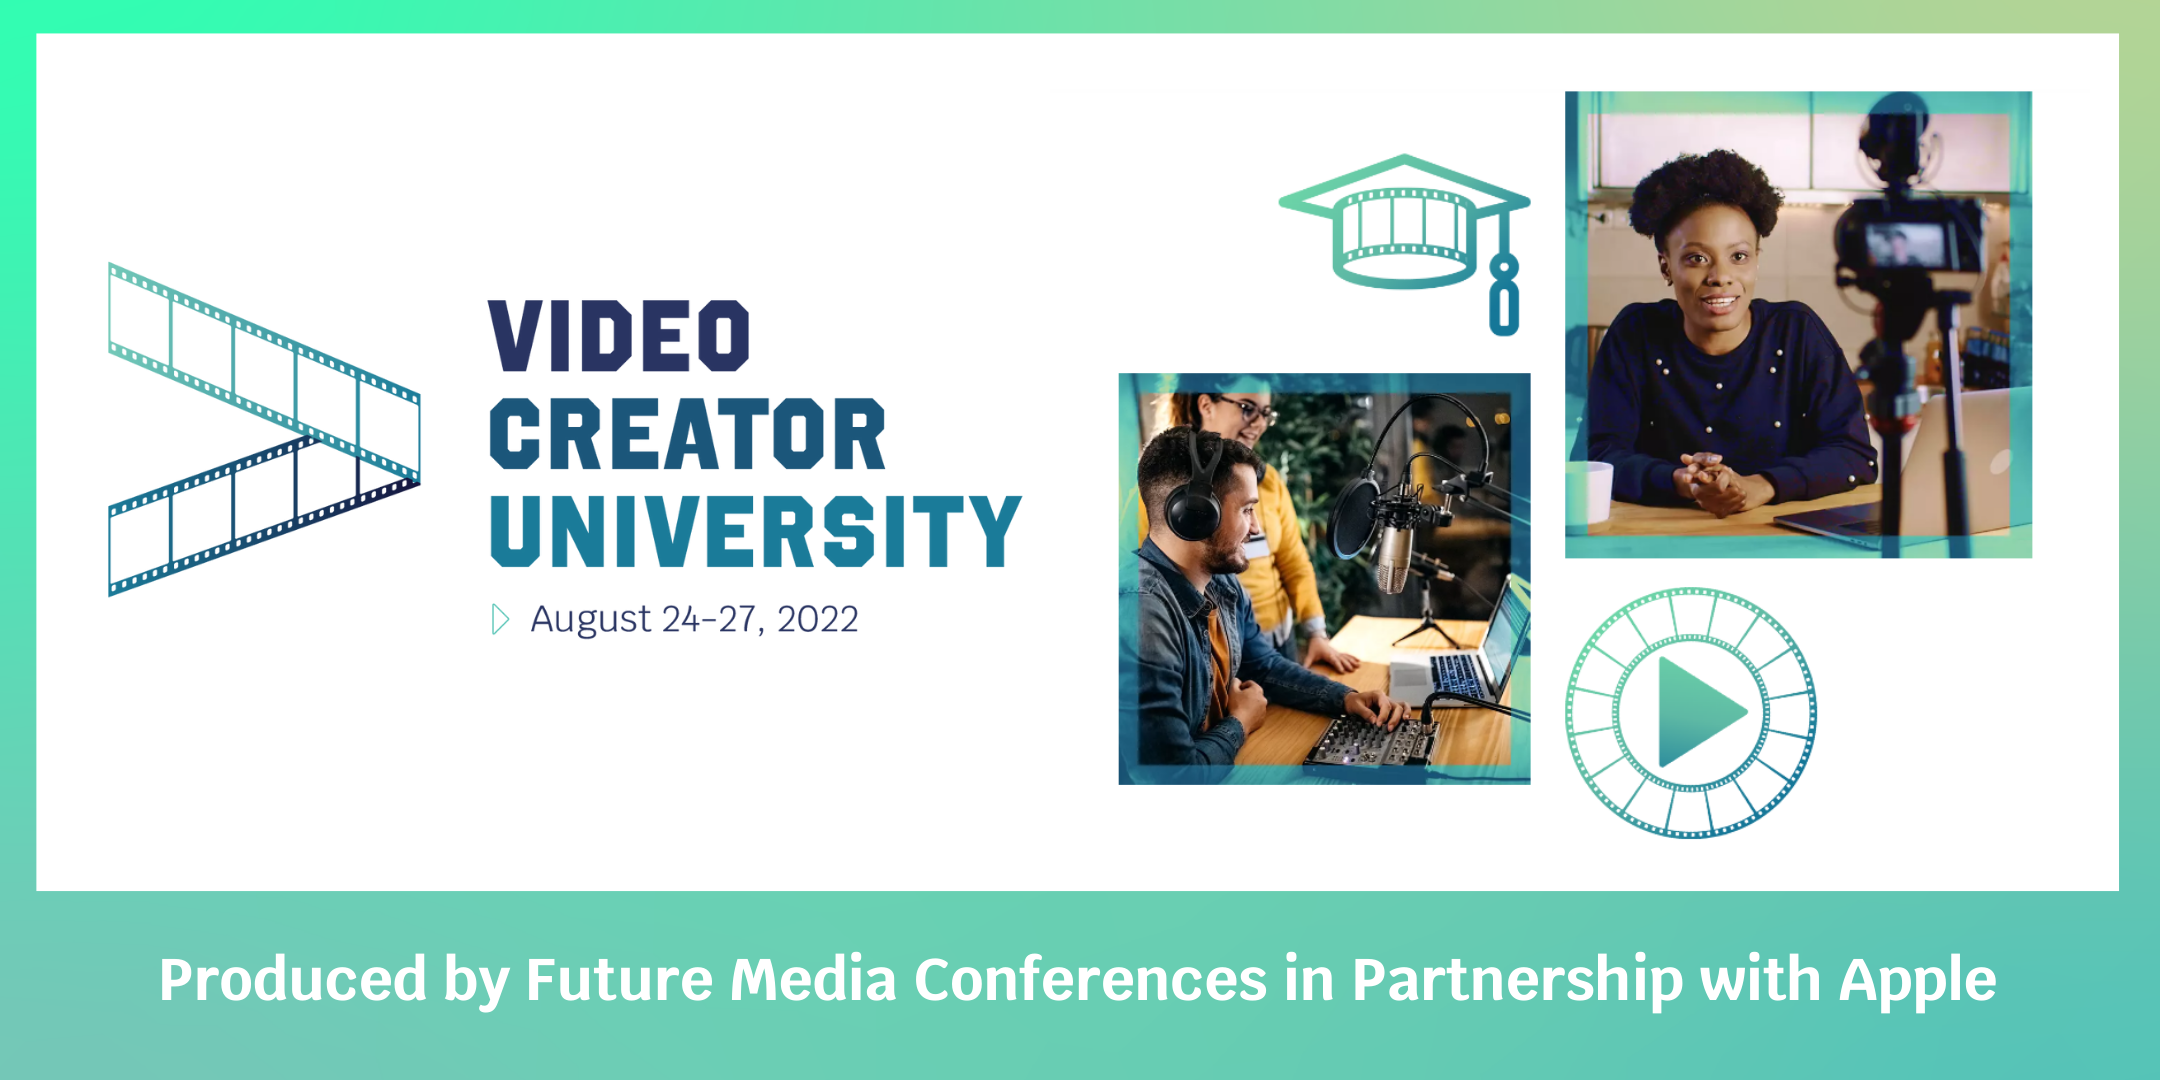 Video Creator University